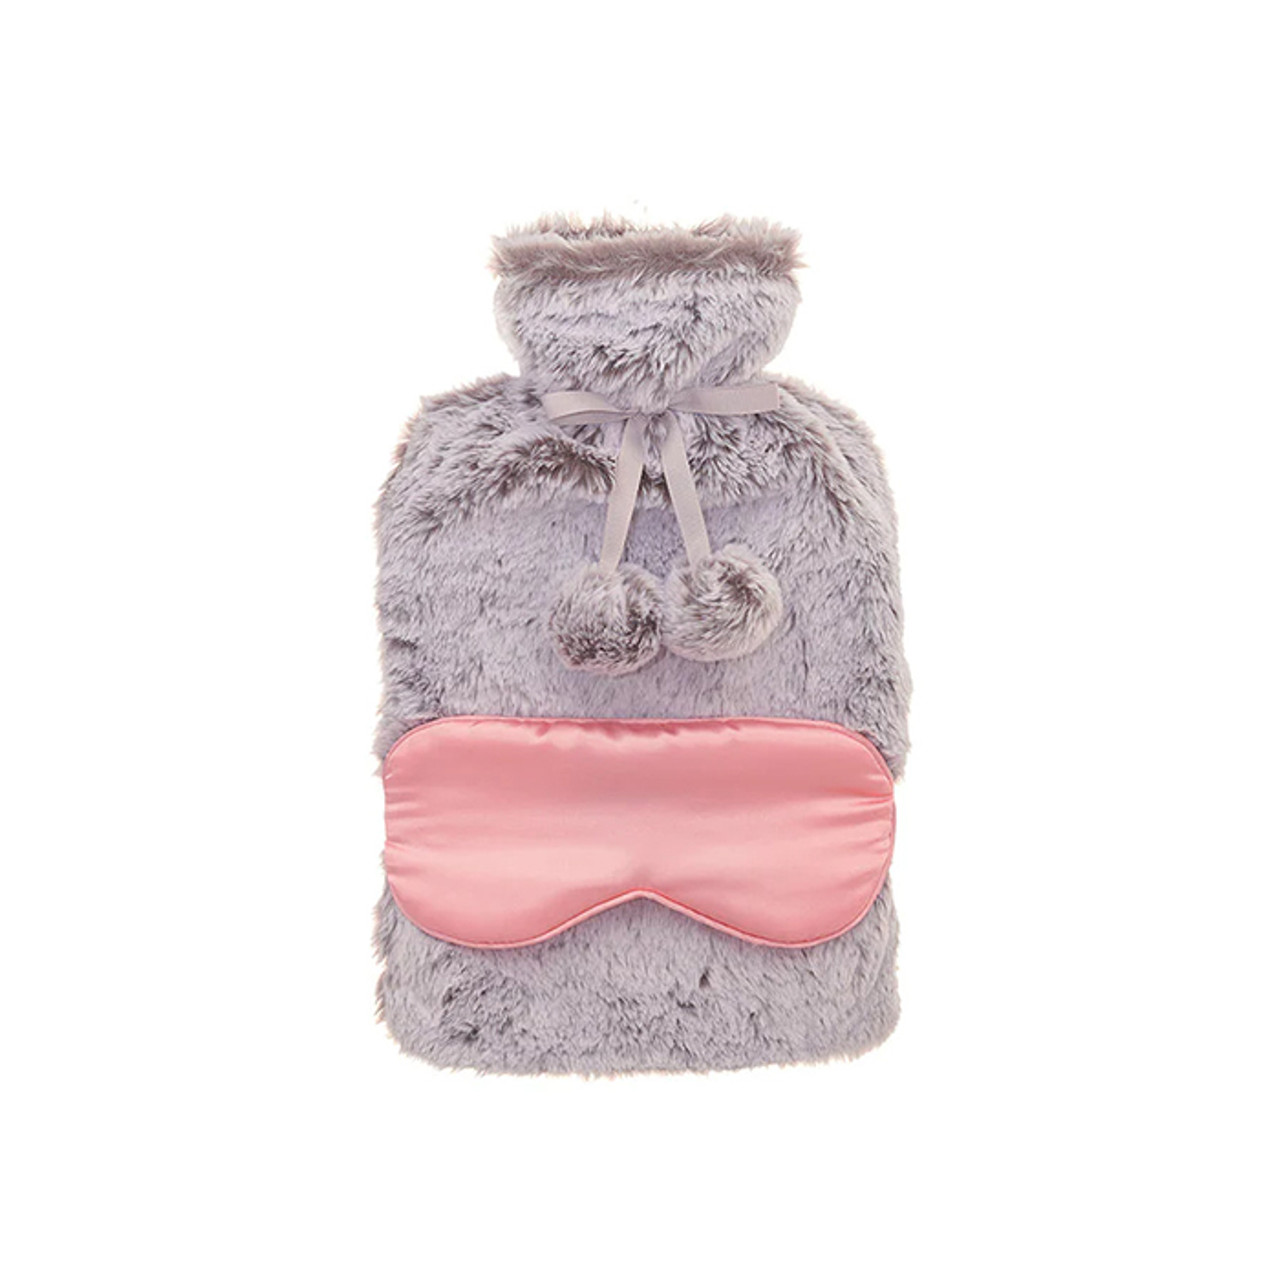 Faux Fur Hot Water Bottle & Satin Eye Mask - Grey/Pink